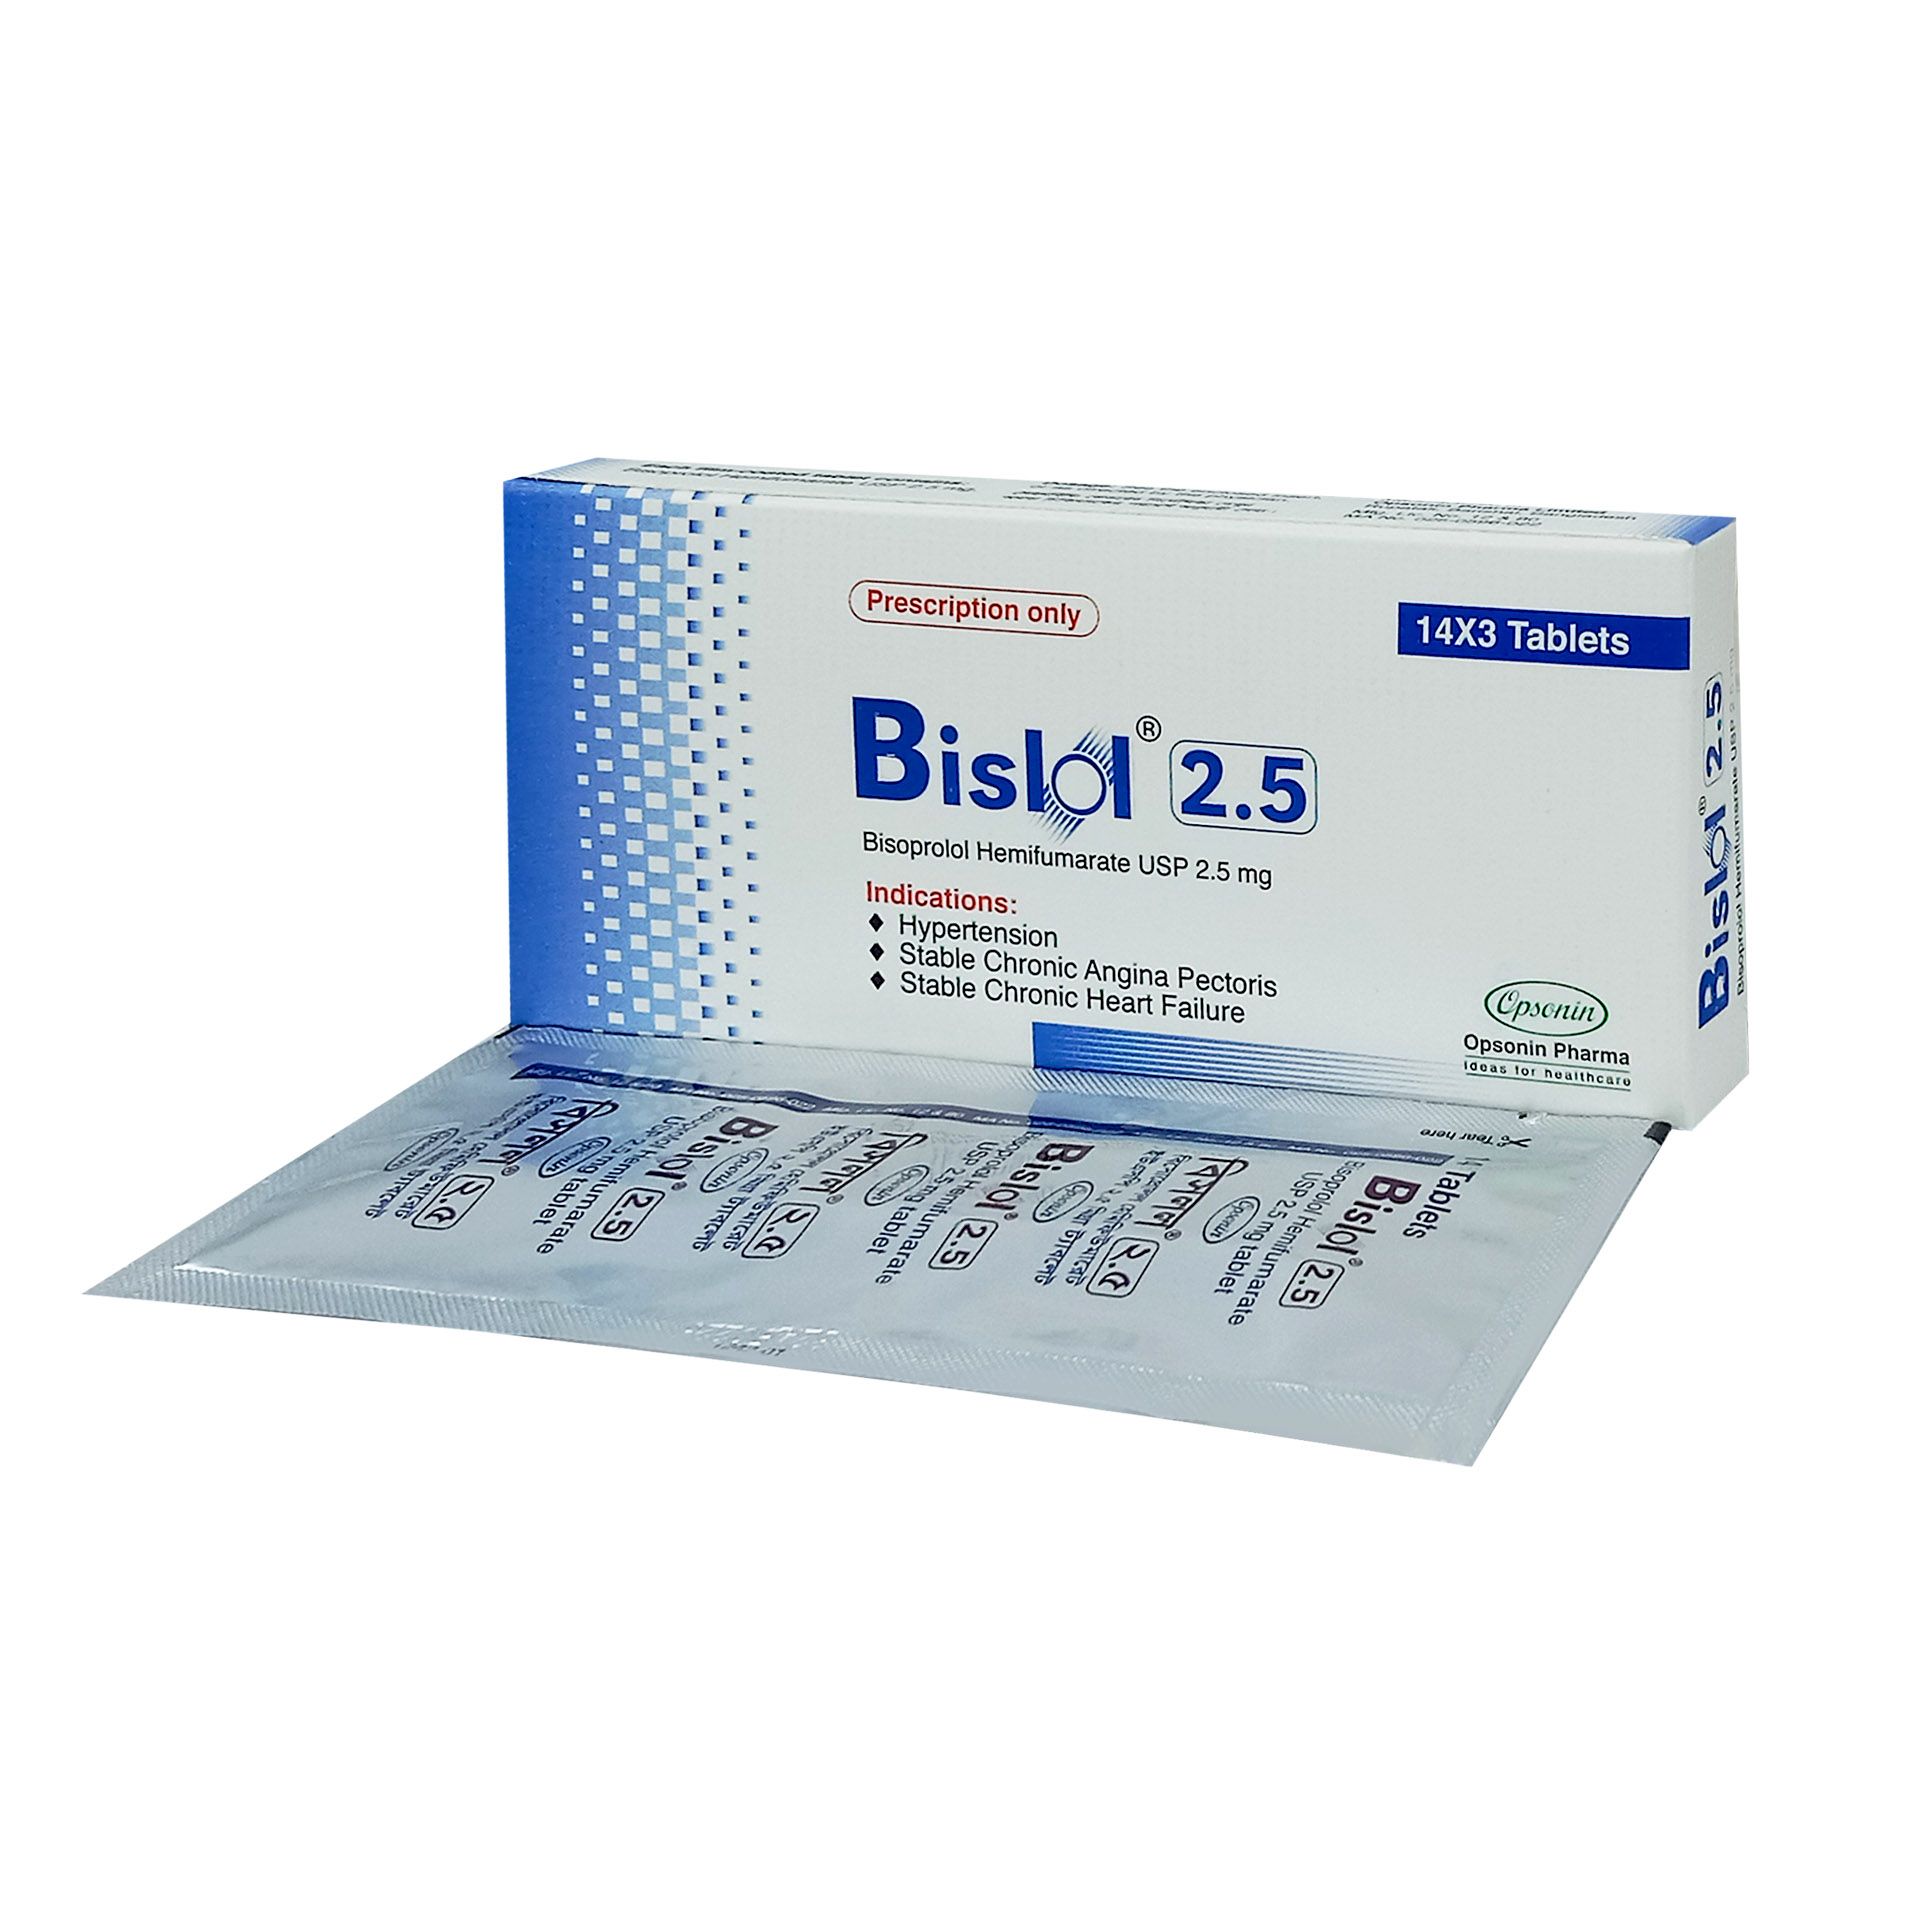 Bislol 2.5 2.5mg Tablet